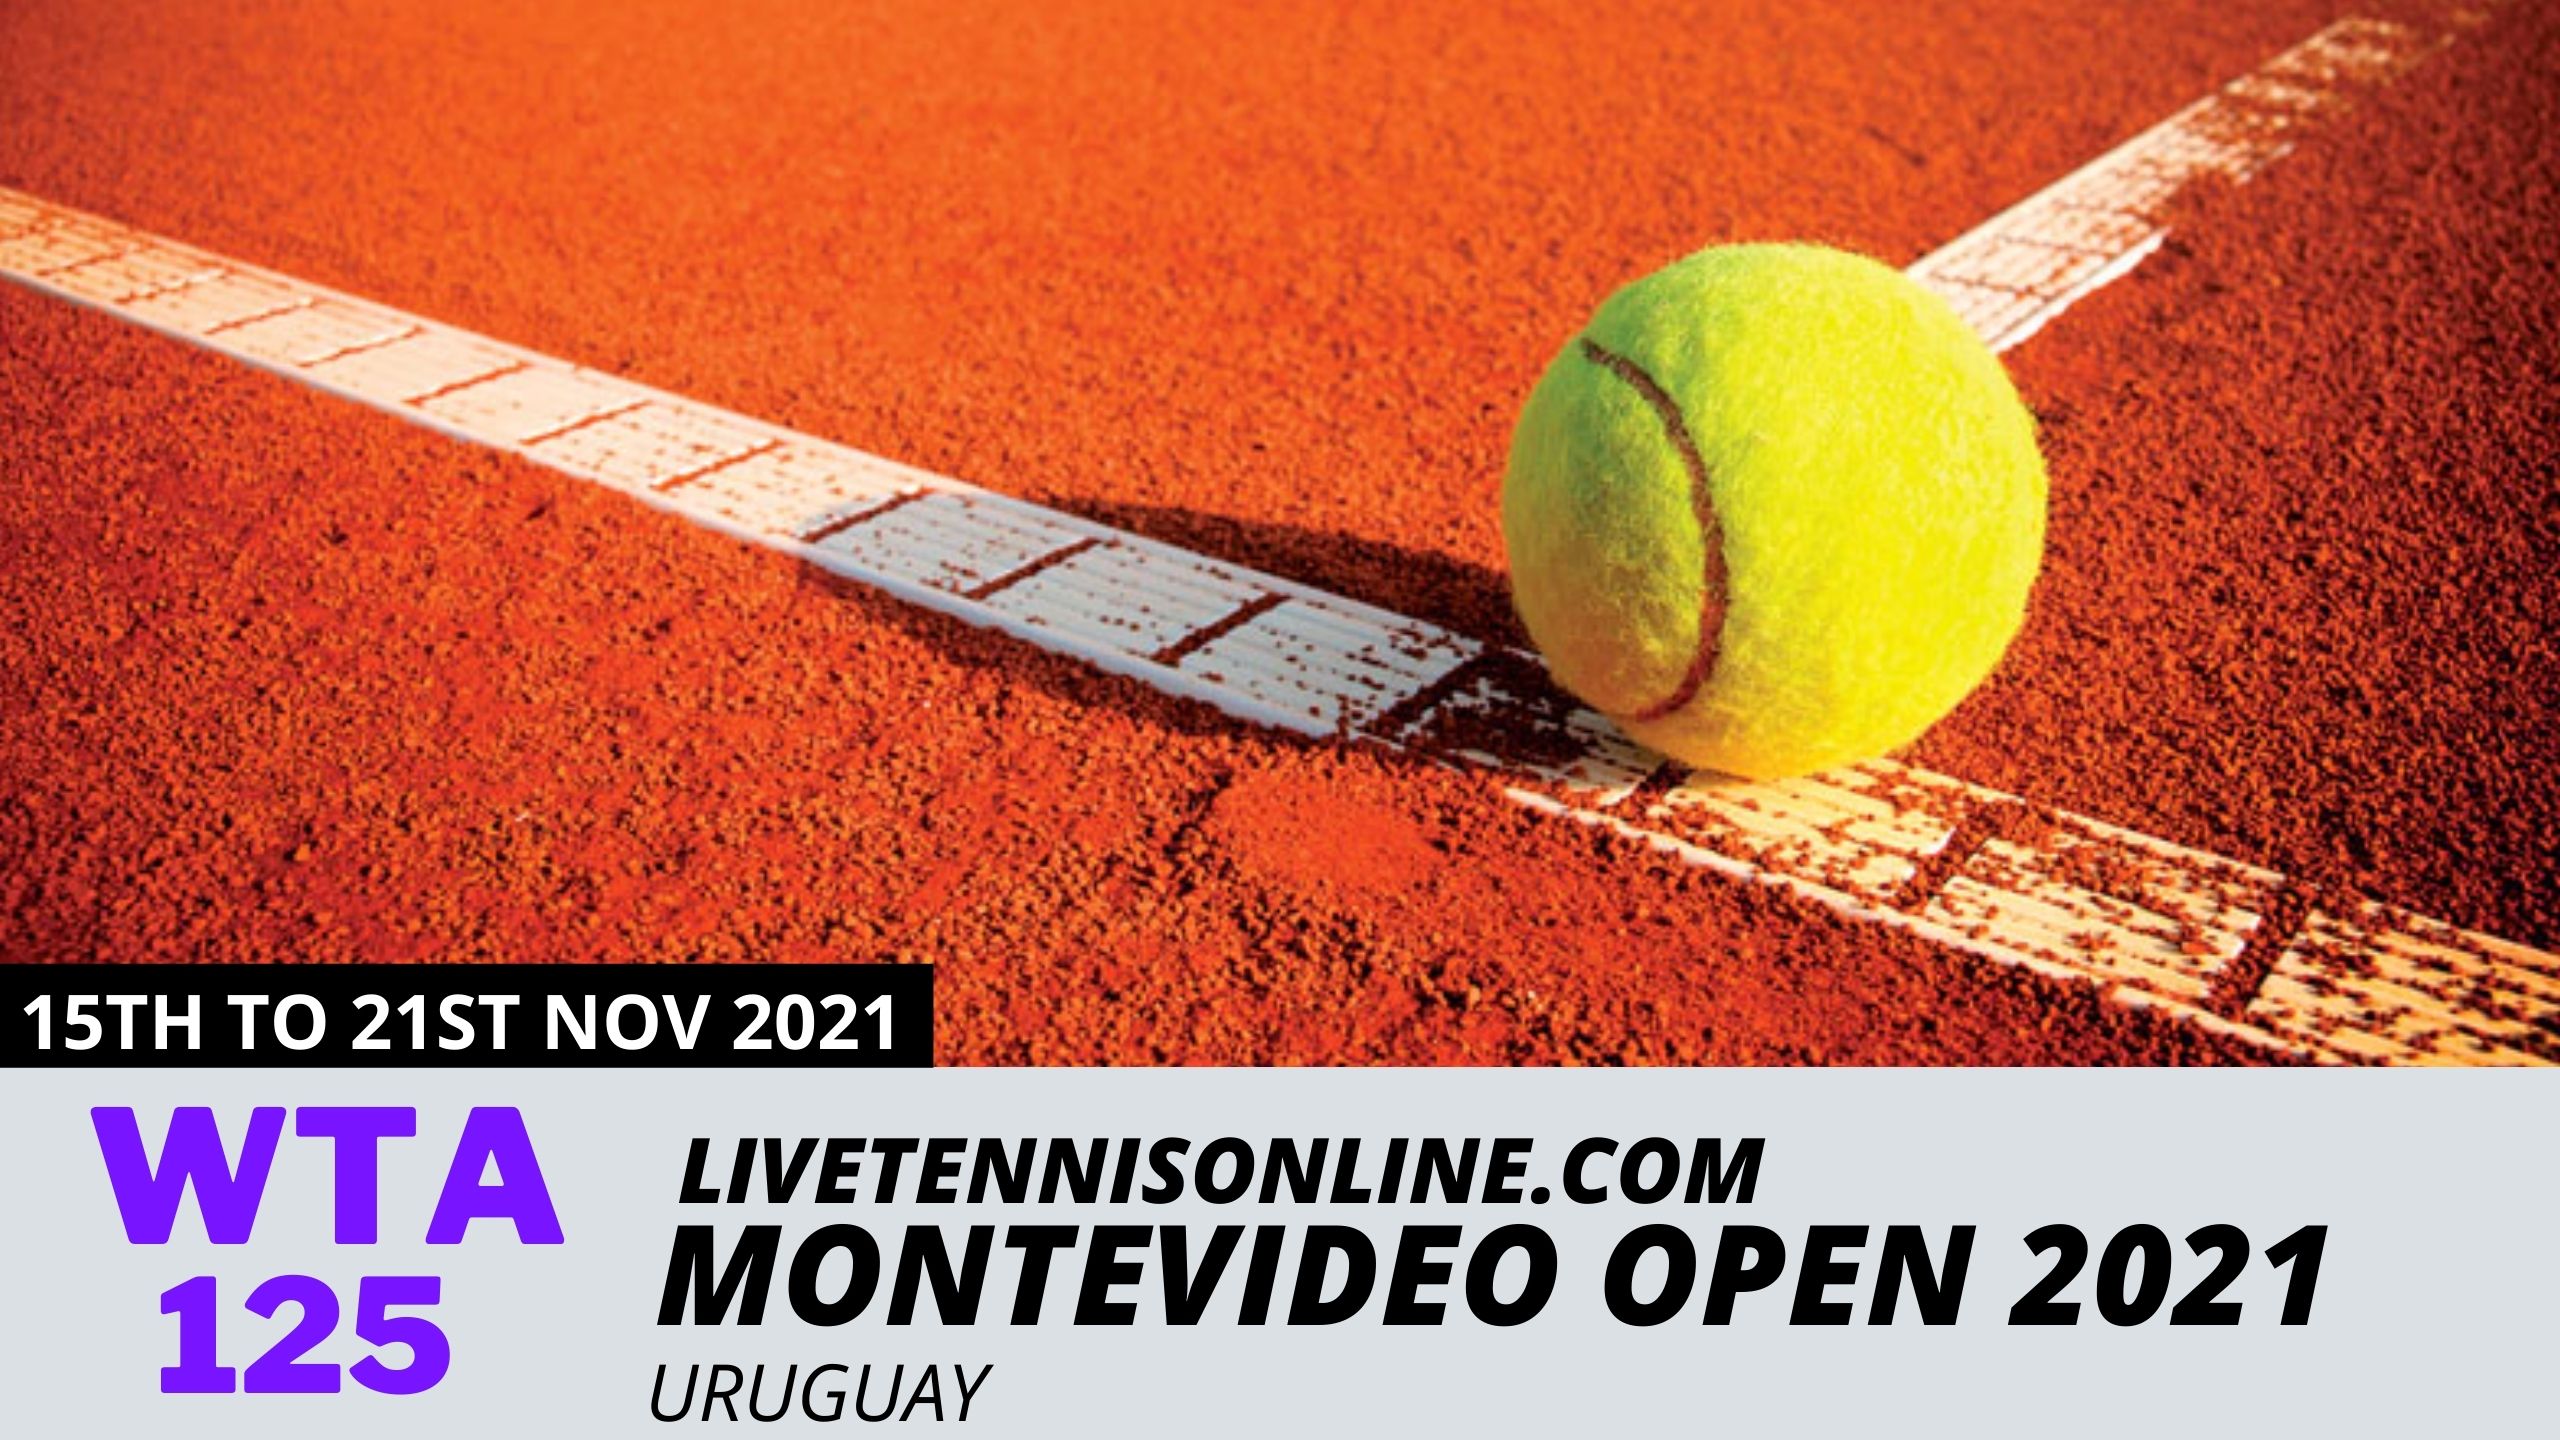 montevideo-open-tennis-live-stream